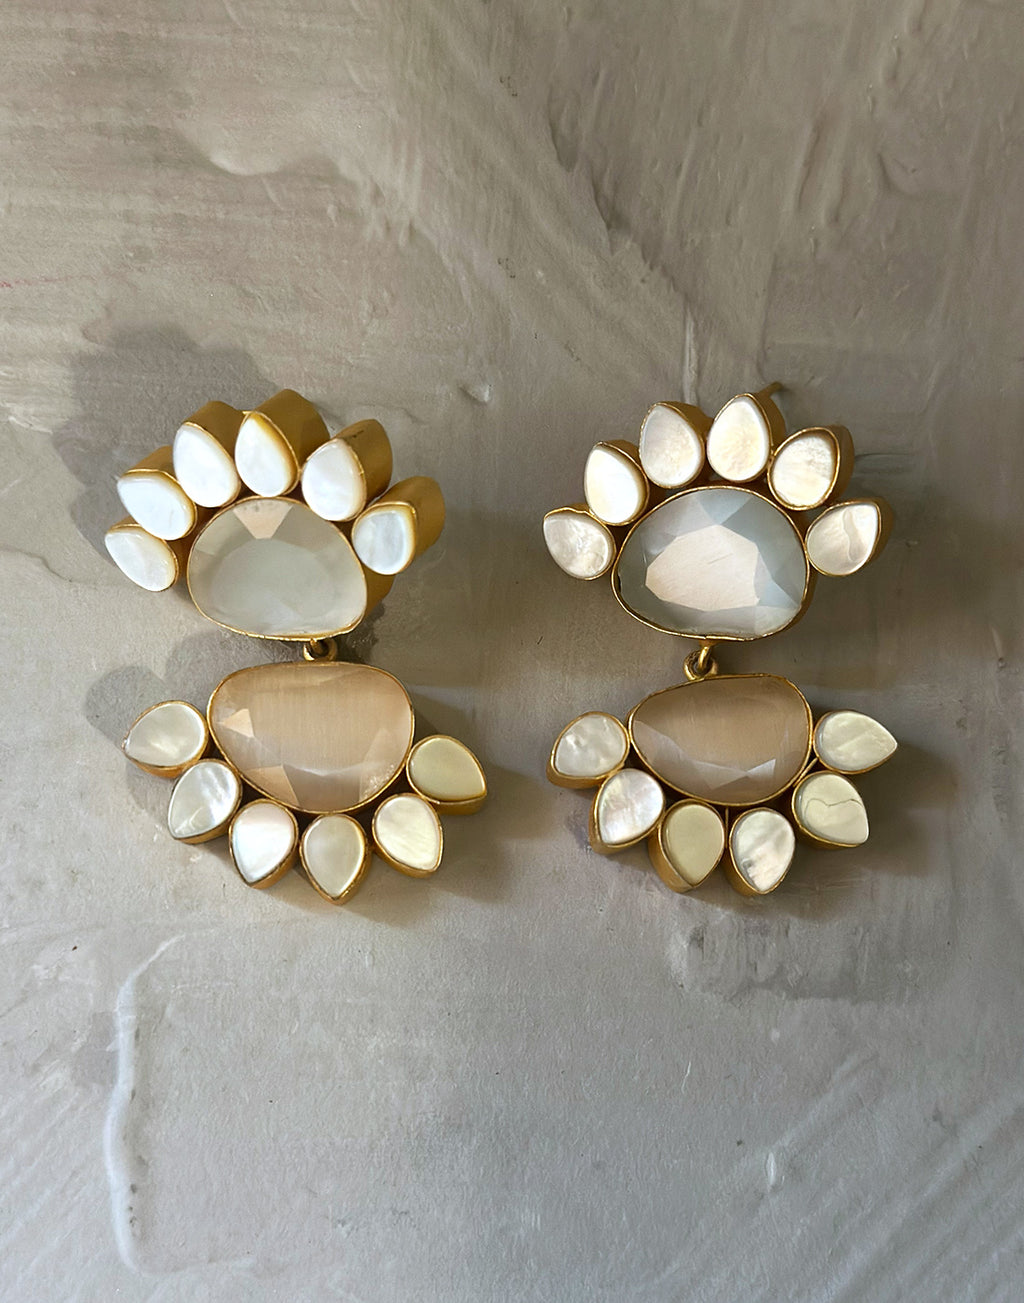 Twin Flower Earrings (Monalisa) - Statement Earrings - Gold-Plated & Hypoallergenic Jewellery - Made in India - Dubai Jewellery - Dori